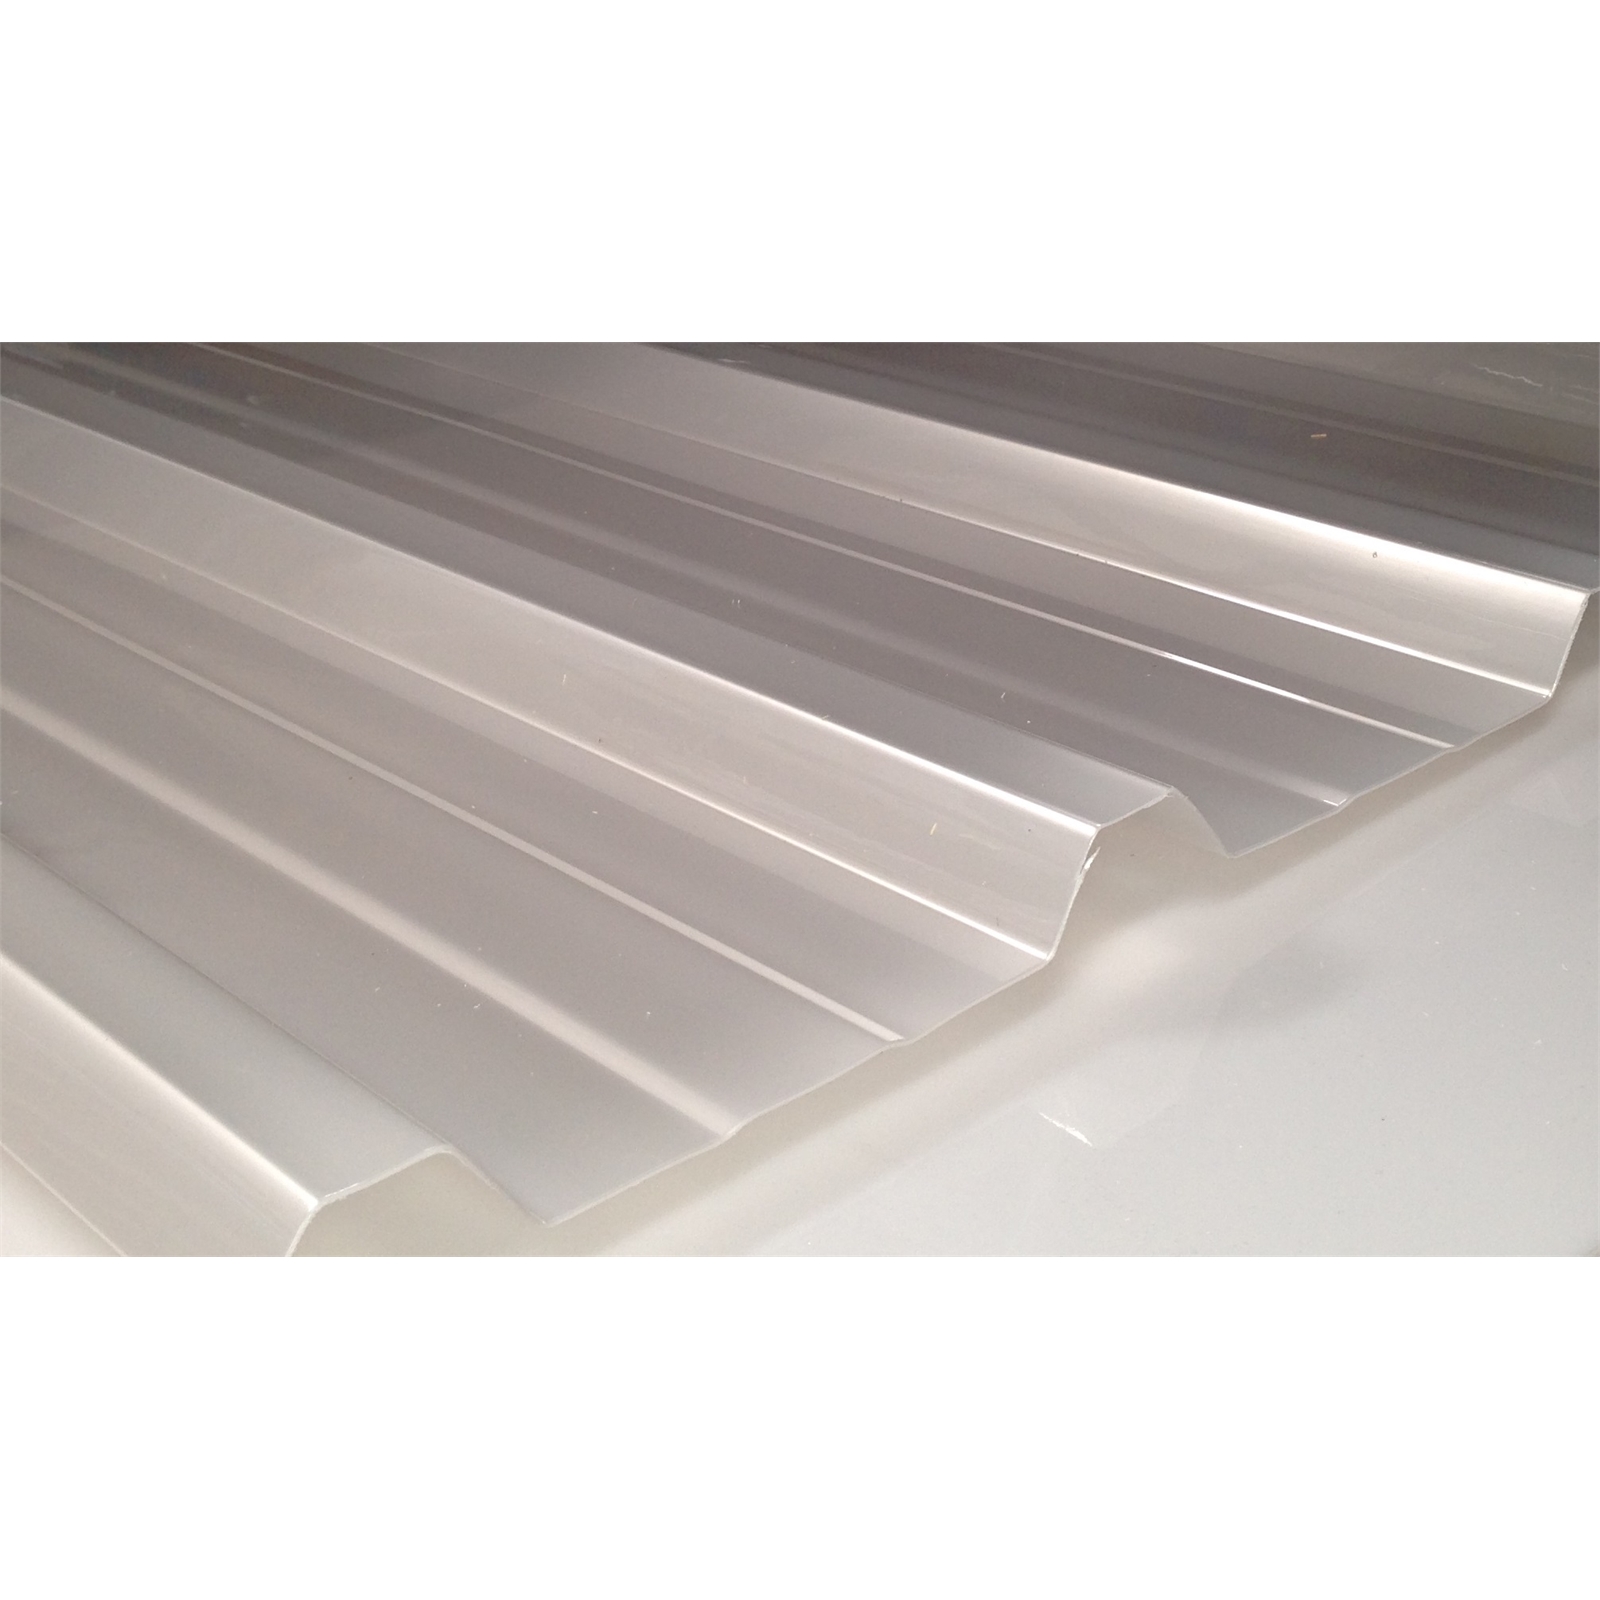 Suntuf Trimdek 1.0 x 2.4m Metallic Ice Polycarbonate Roofing